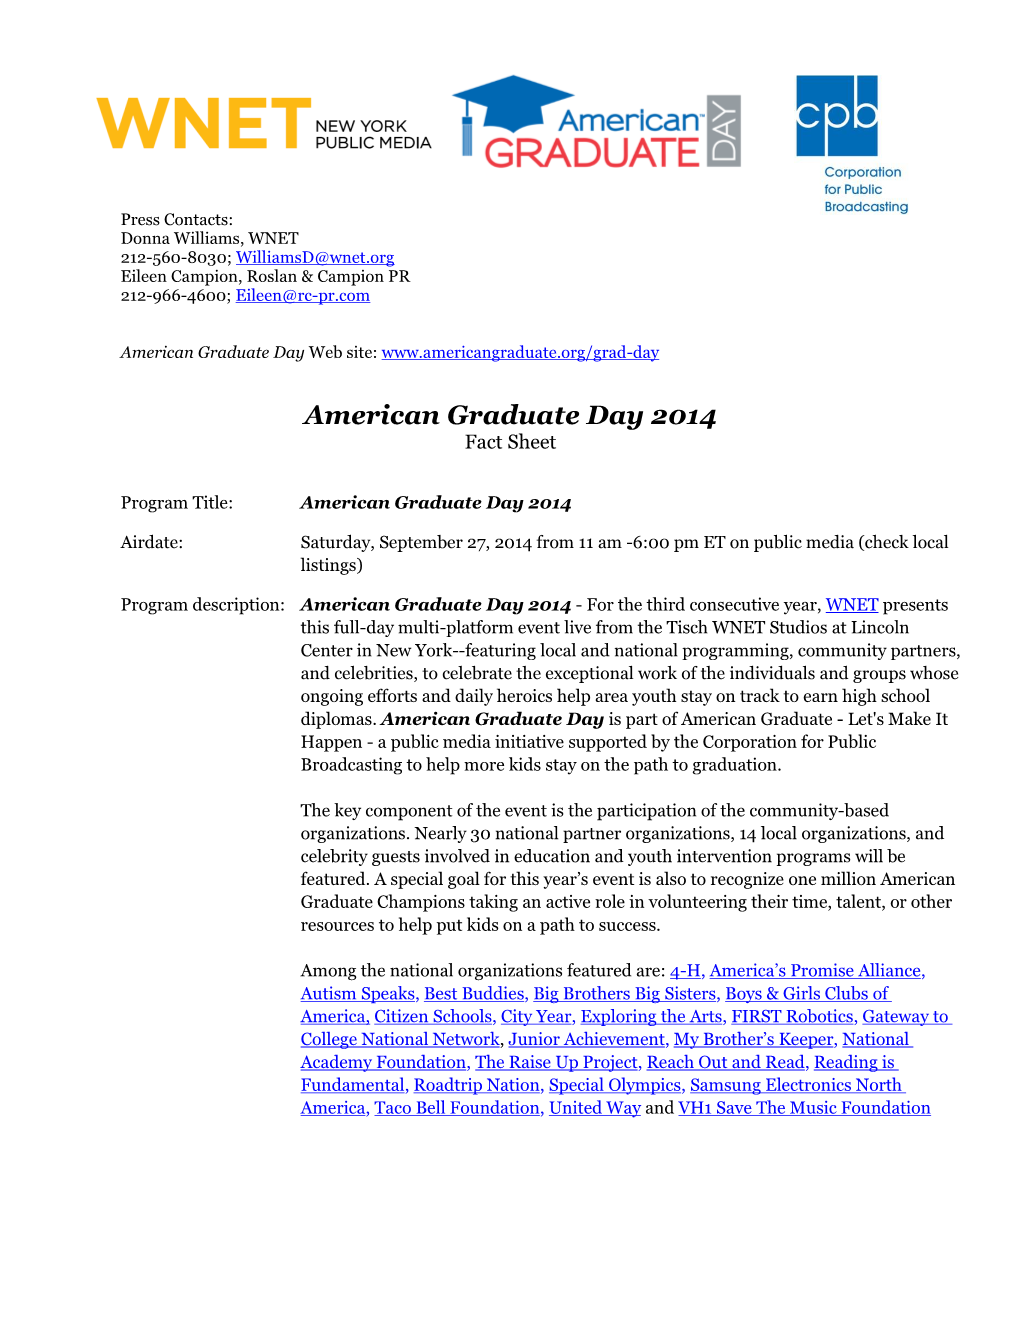 American Graduate Day Fact Sheet